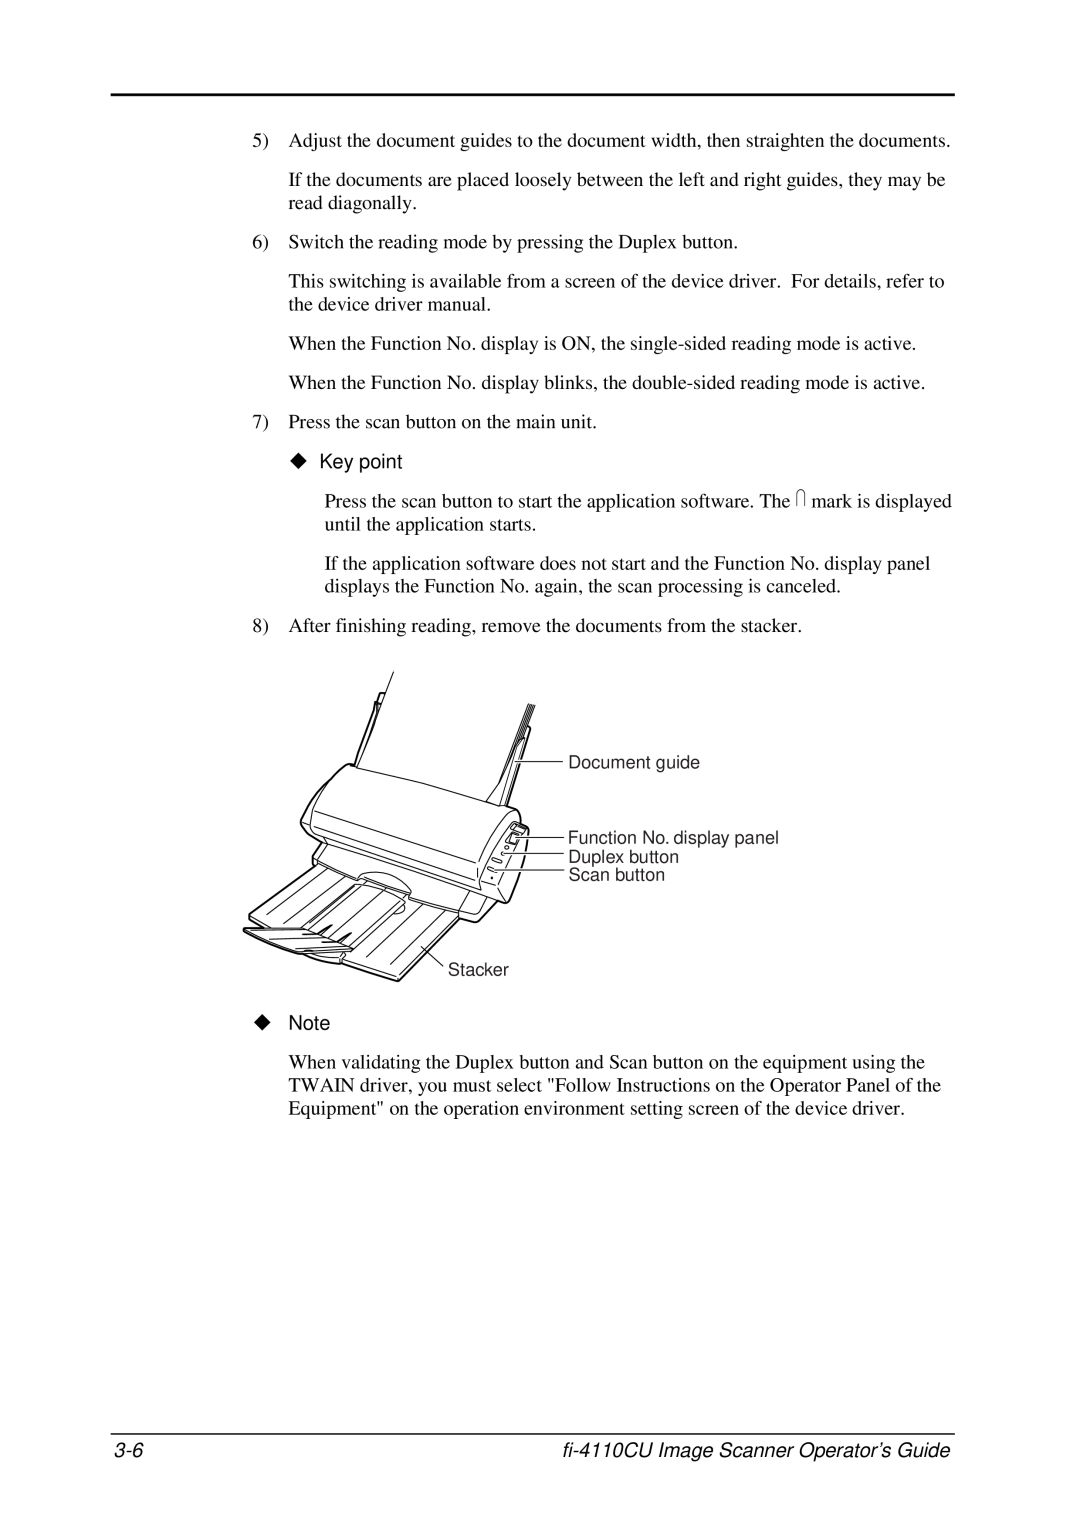 Fujitsu C150-E194-01EN Switch the reading mode by pressing the Duplex button, fi-4110CU Image Scanner Operator’s Guide 